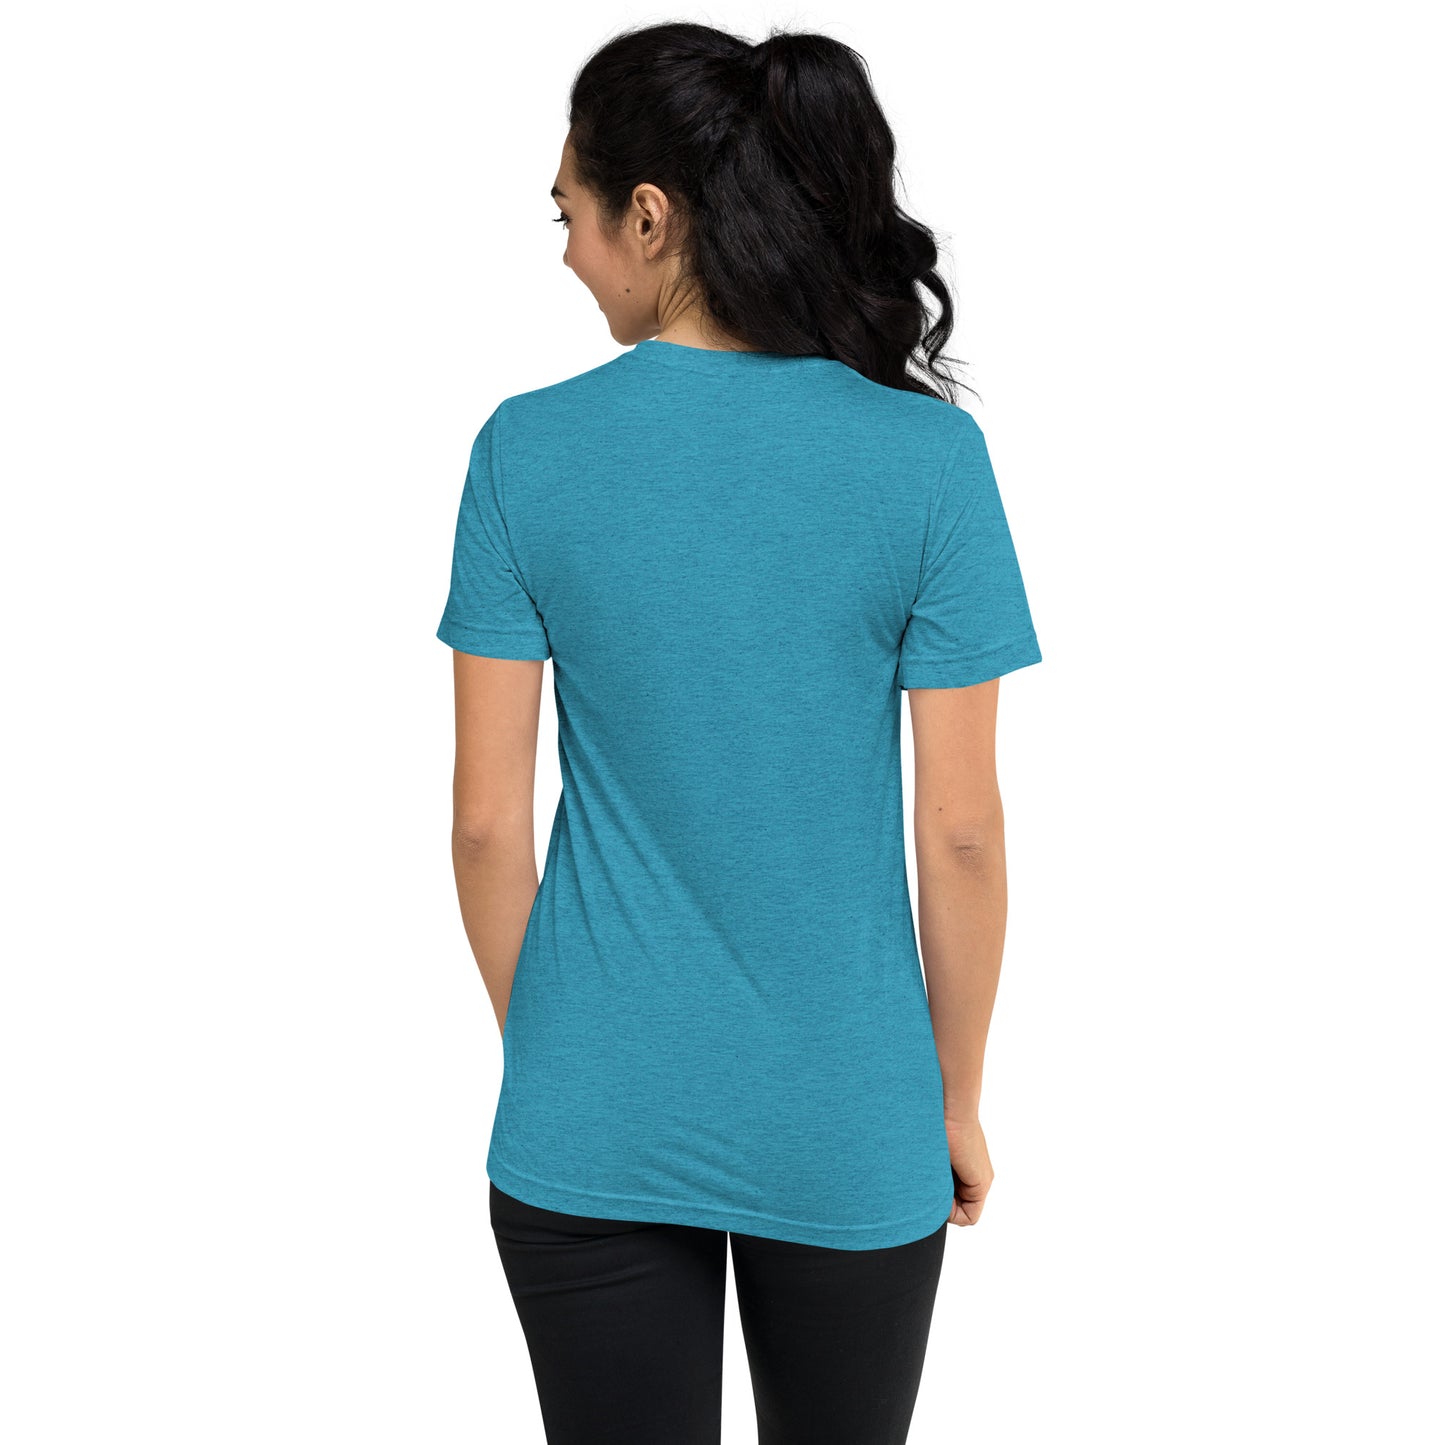 305 Miami Short Sleeve Tri-blend T-Shirt